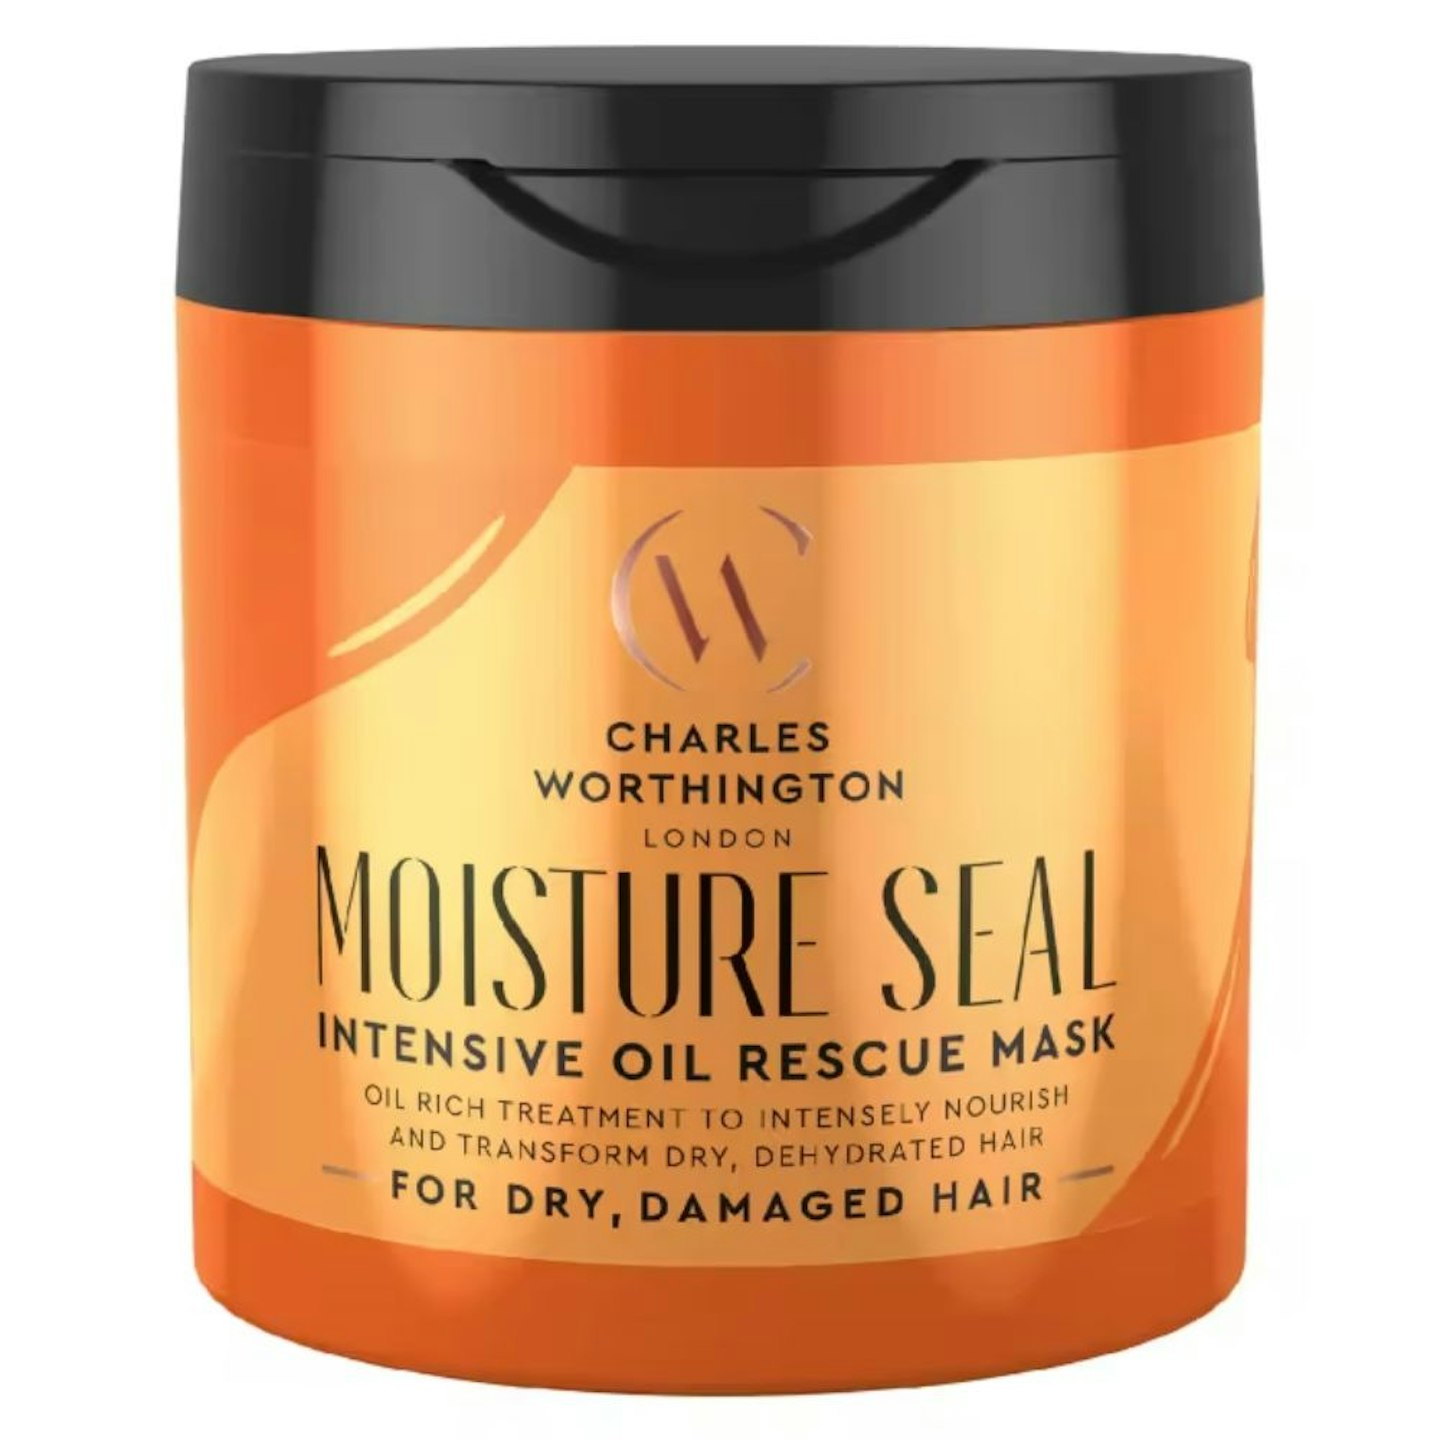  Charles Worthington Moisture Seal Intensive Oil Rescue Mask 150ml